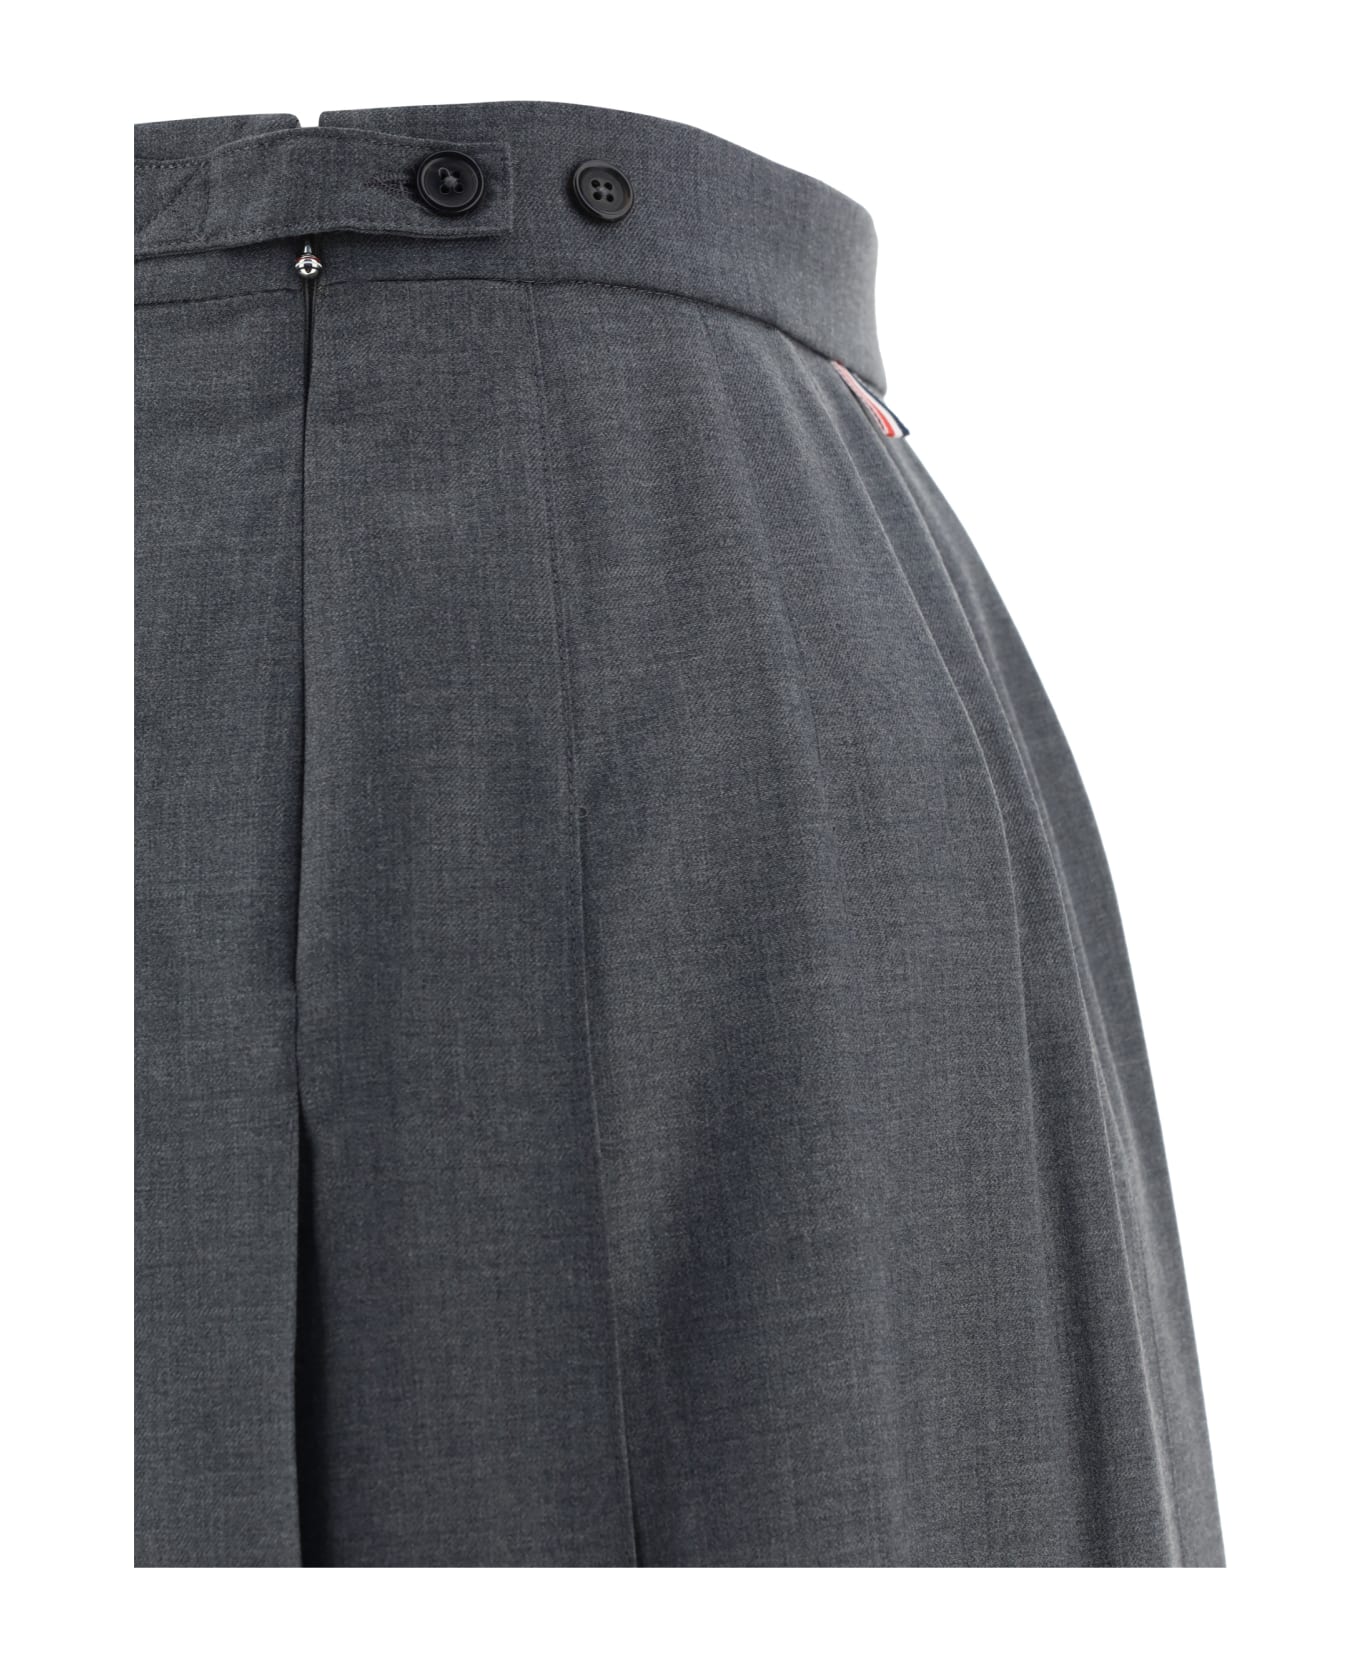 Thom Browne Skirt - Grey